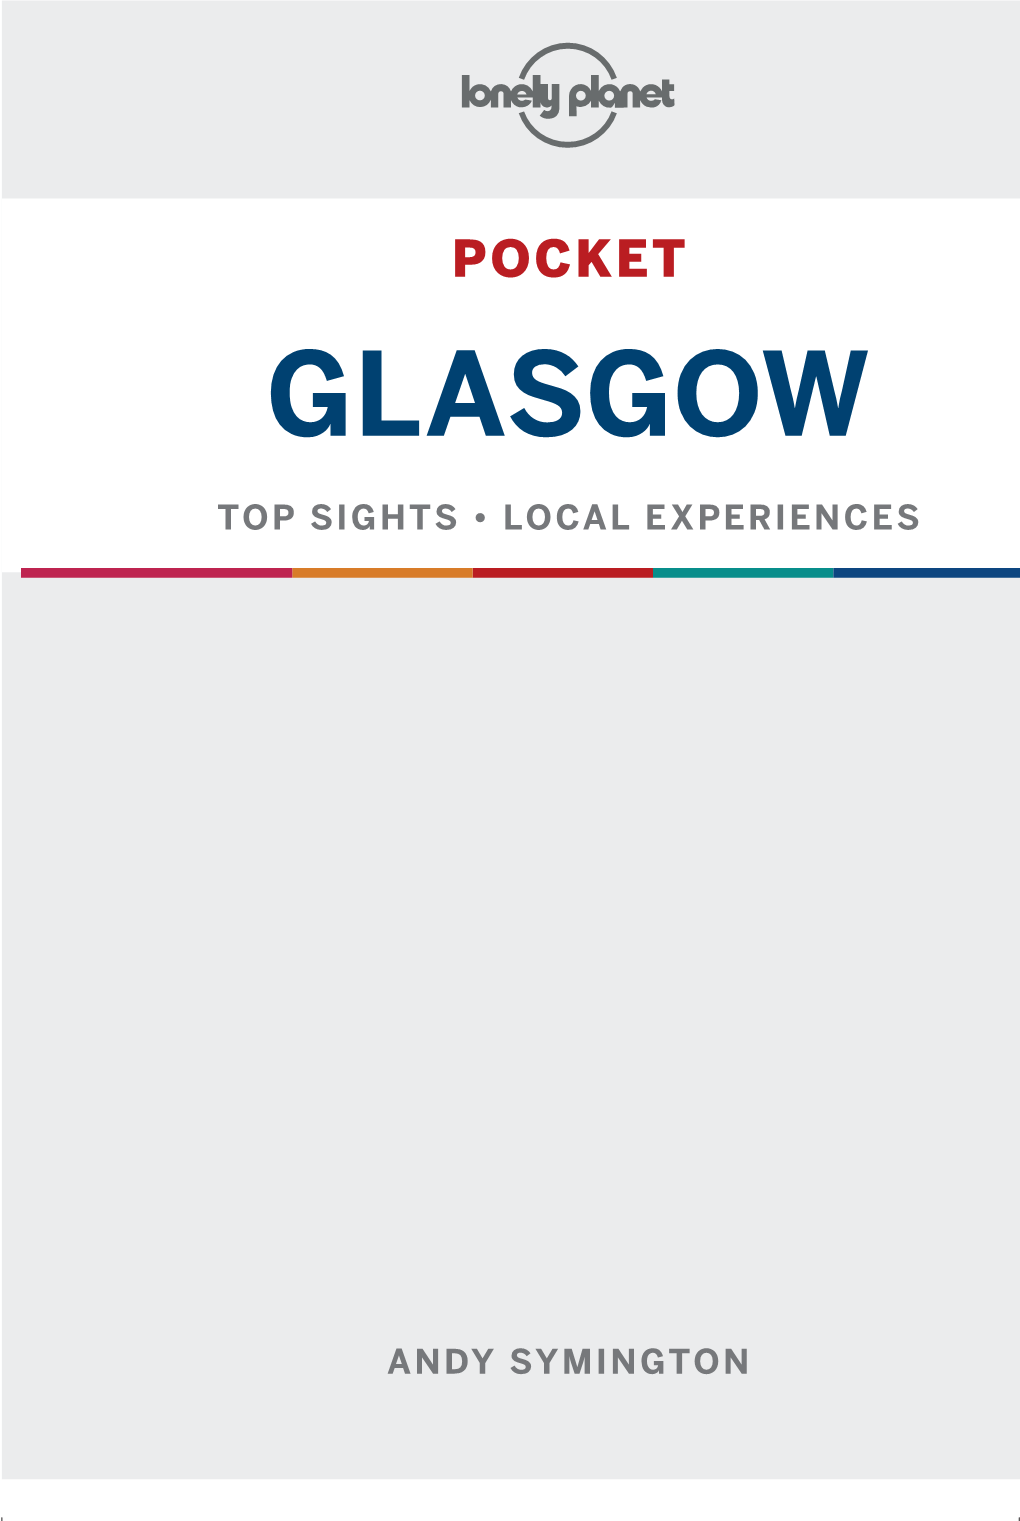 Pocket Glasgow 1 Preview